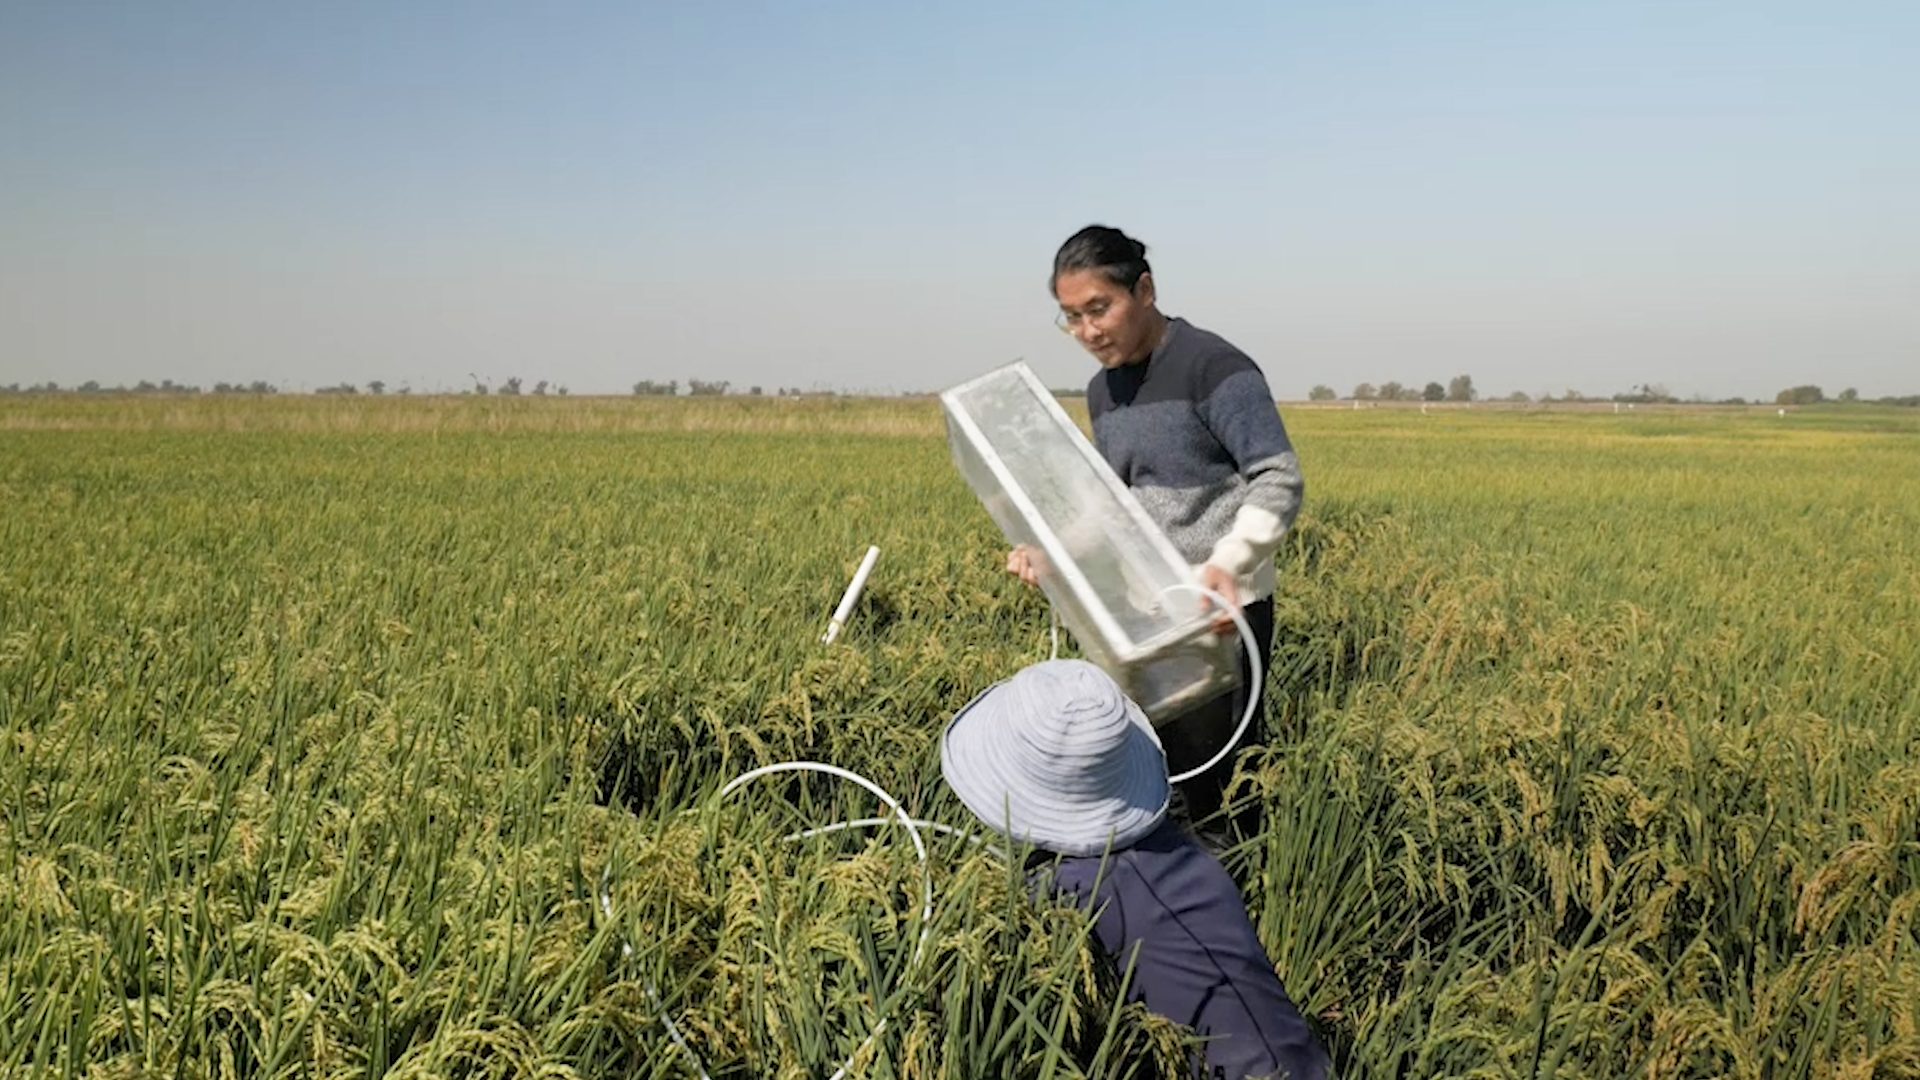 Jack Kim 和 Jill Banfield 在稻田里用 Picarro 毒气室测量甲烷排放